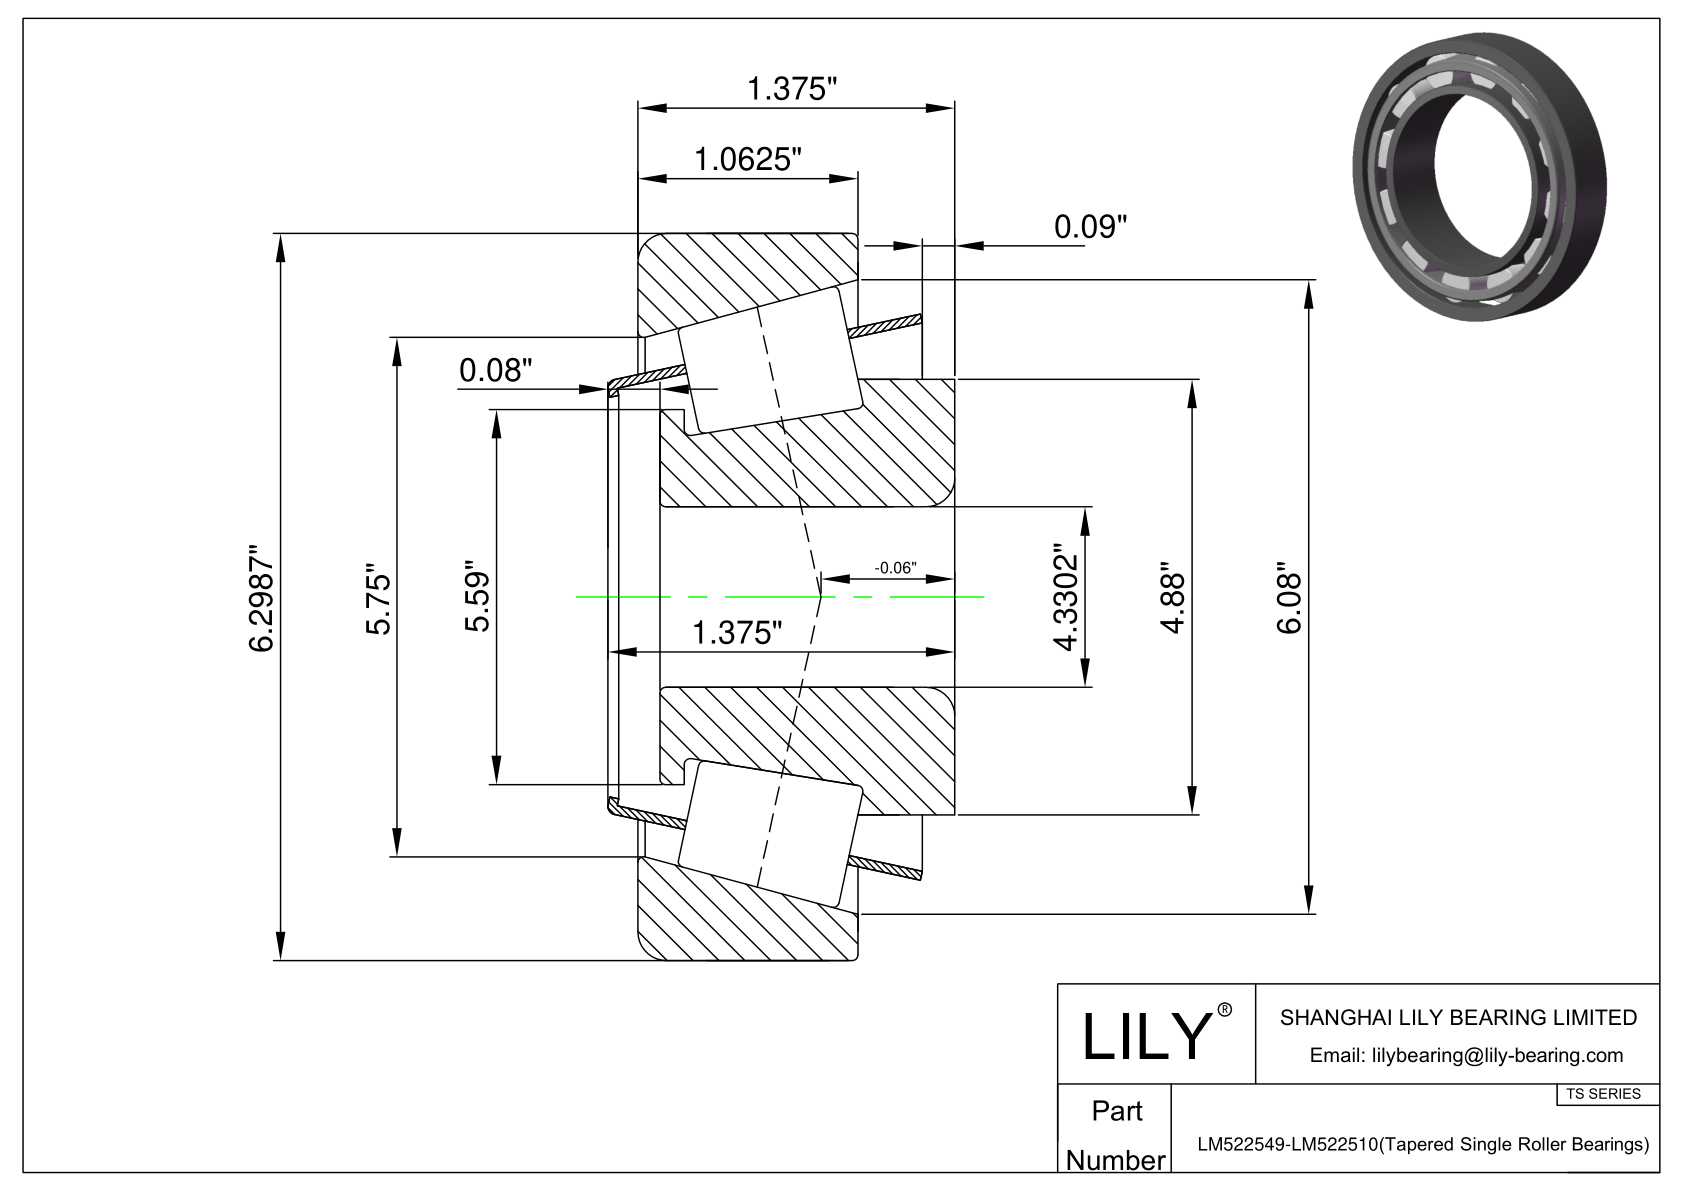 LM522549-LM522510 TS系列(圆锥单滚子轴承)(英制) CAD图形